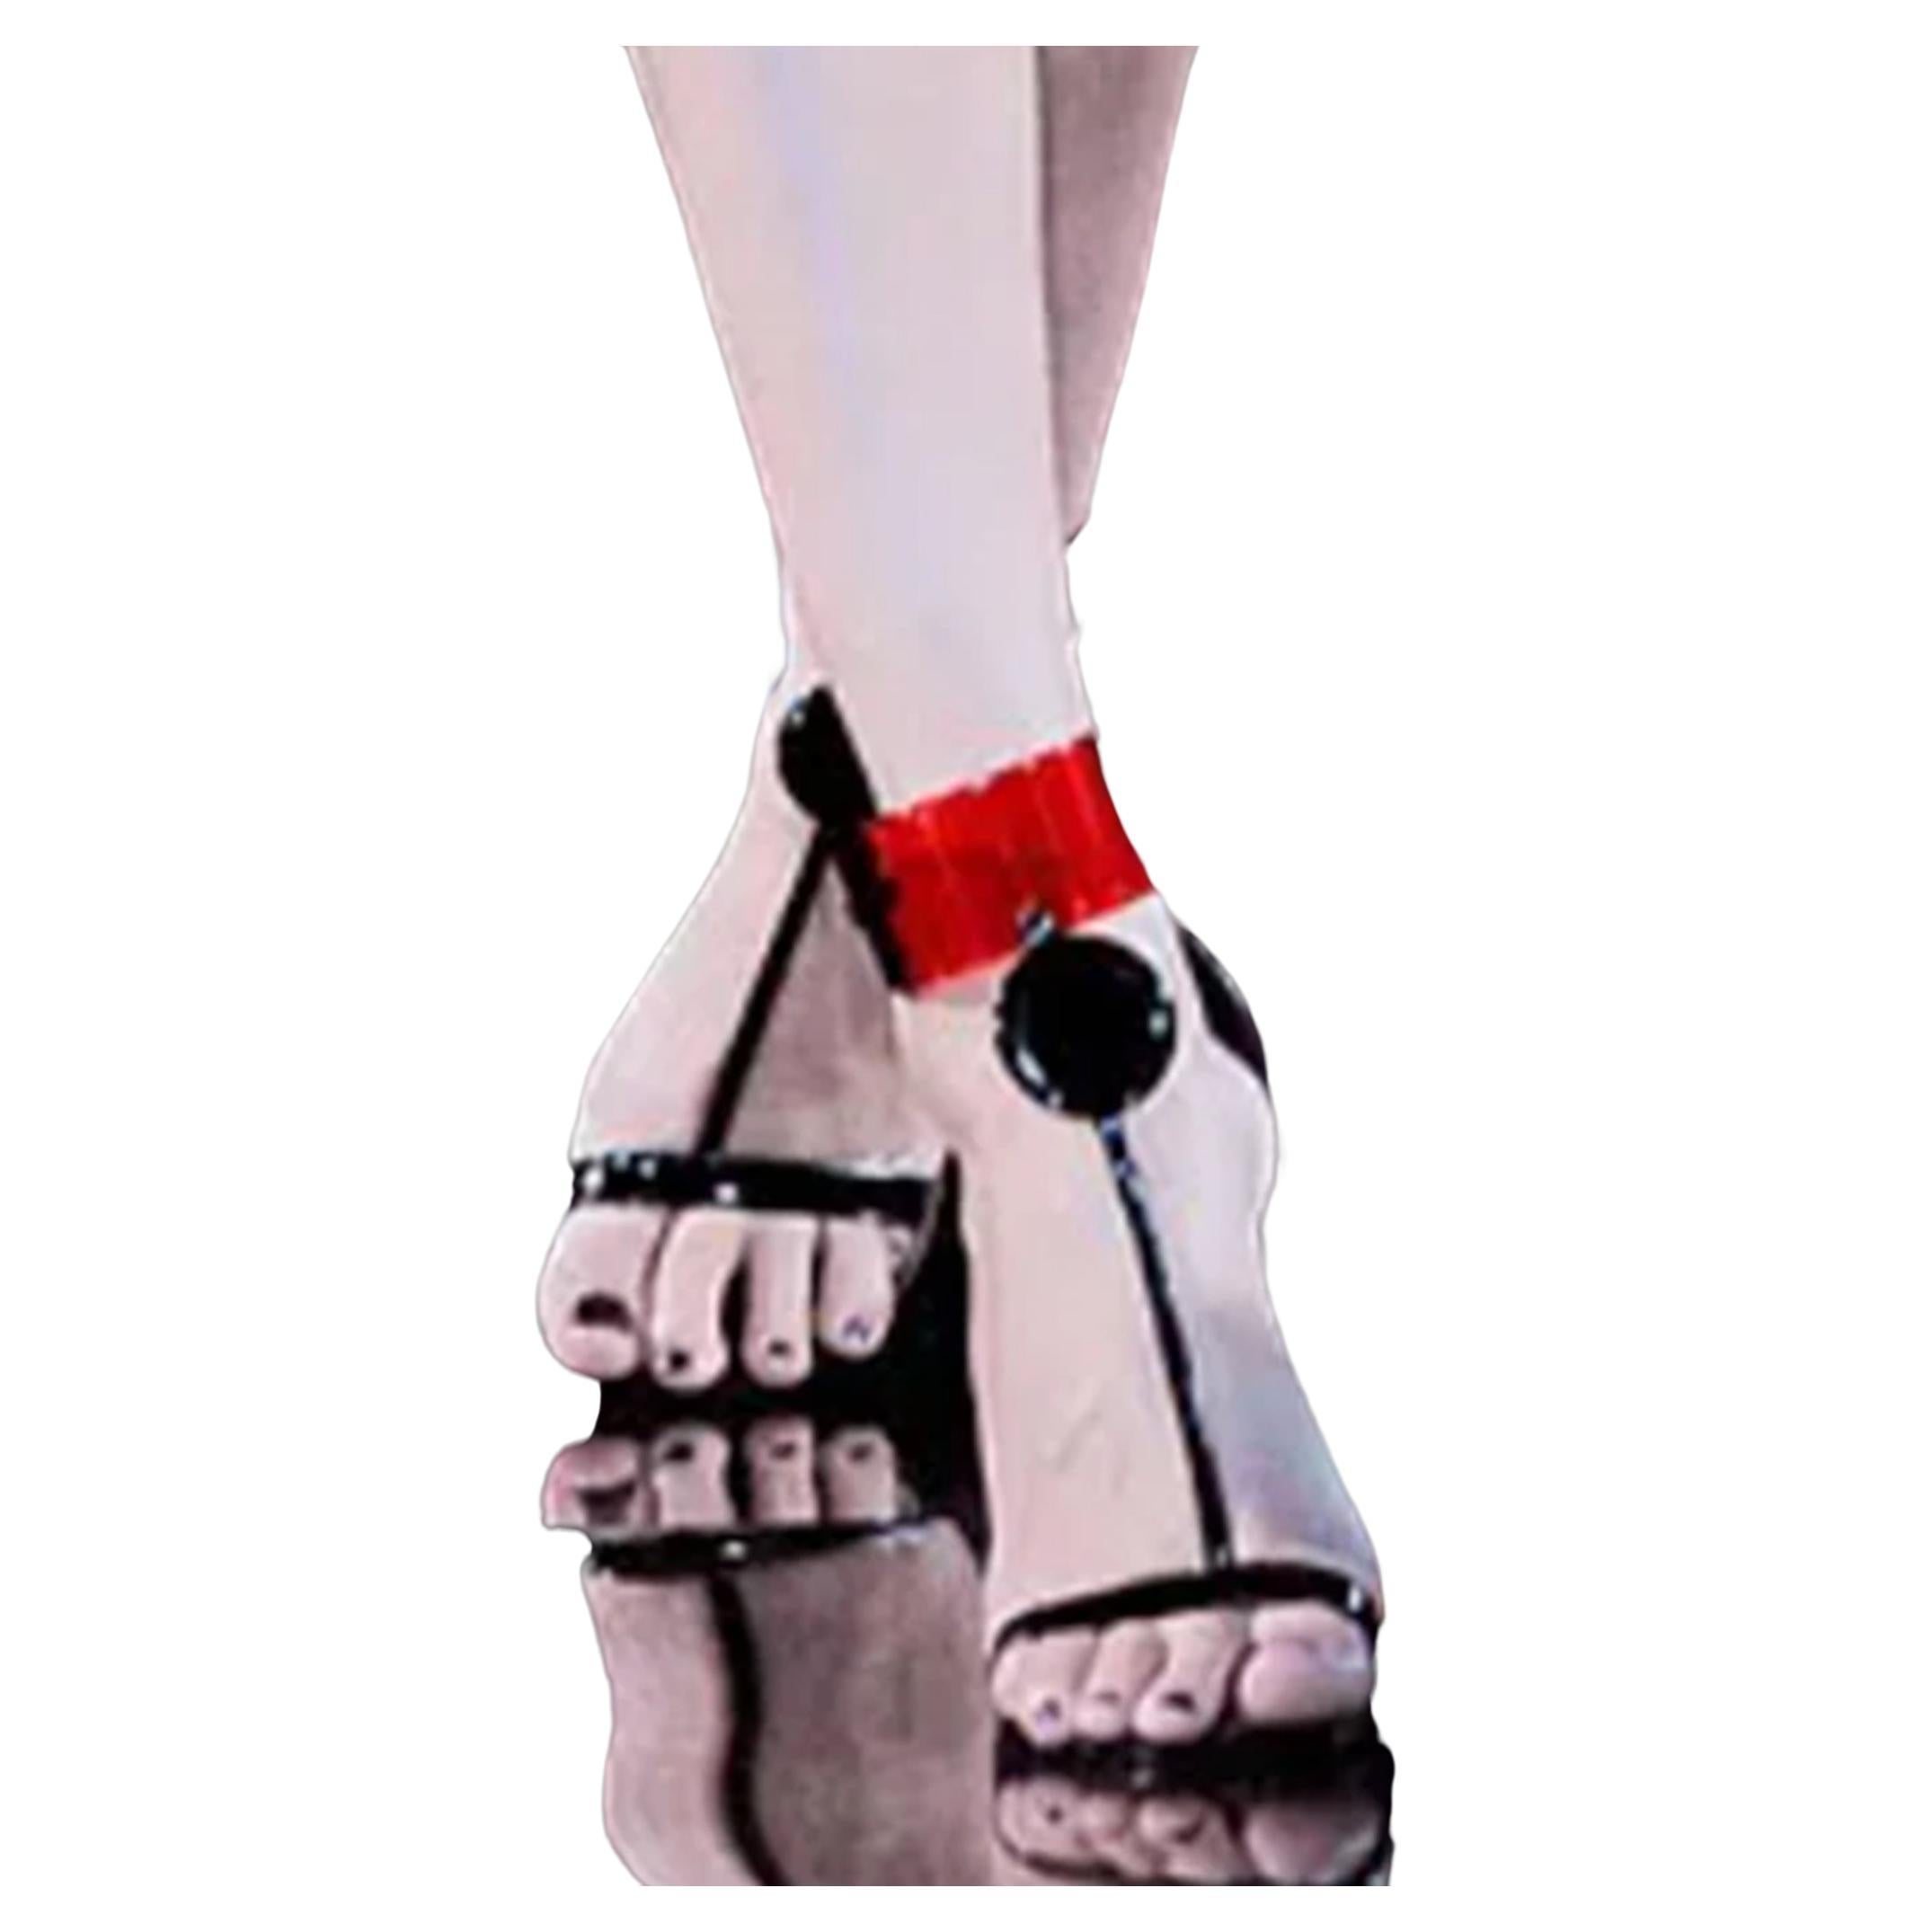 EMPORIO ARMANI SS10 Red & black lucite heel